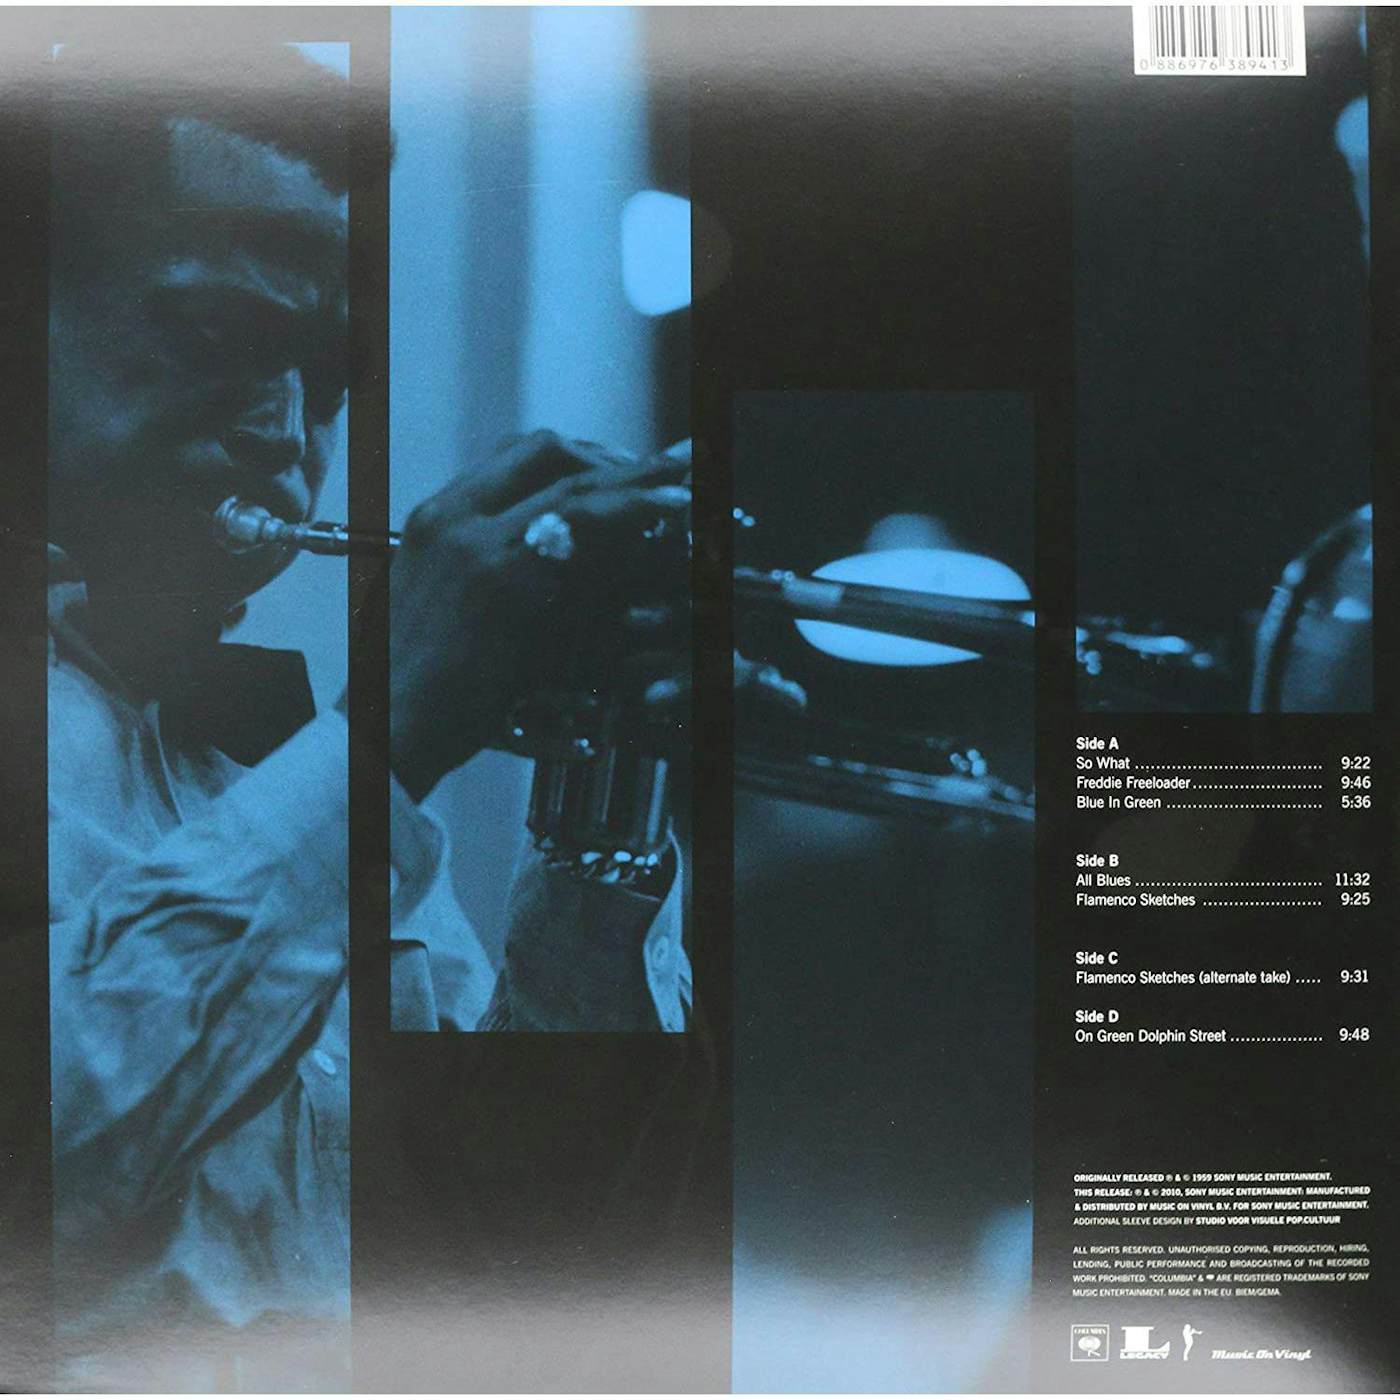 Miles Davis Kind Of Blue Vinyl Record